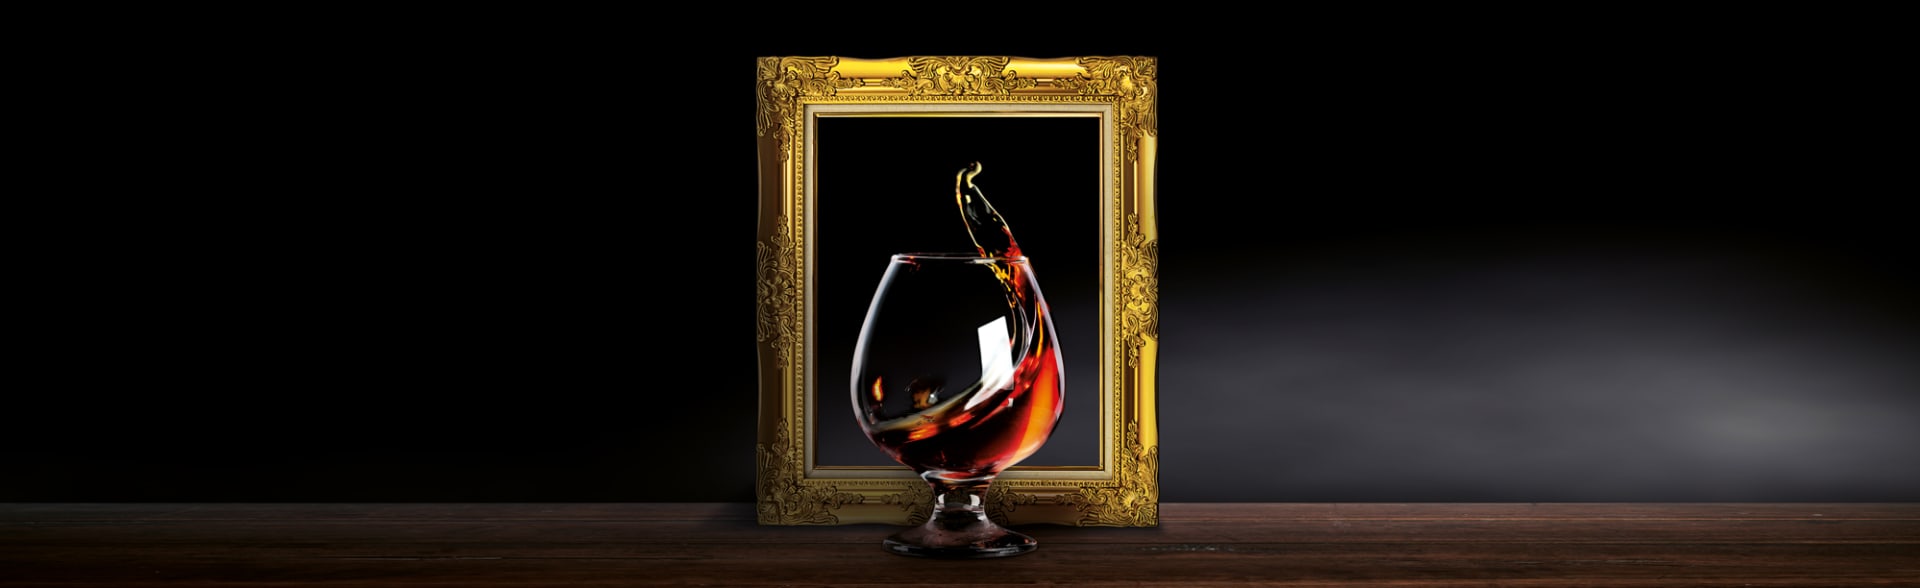 “Image of framed glass of spirit against a dark background”